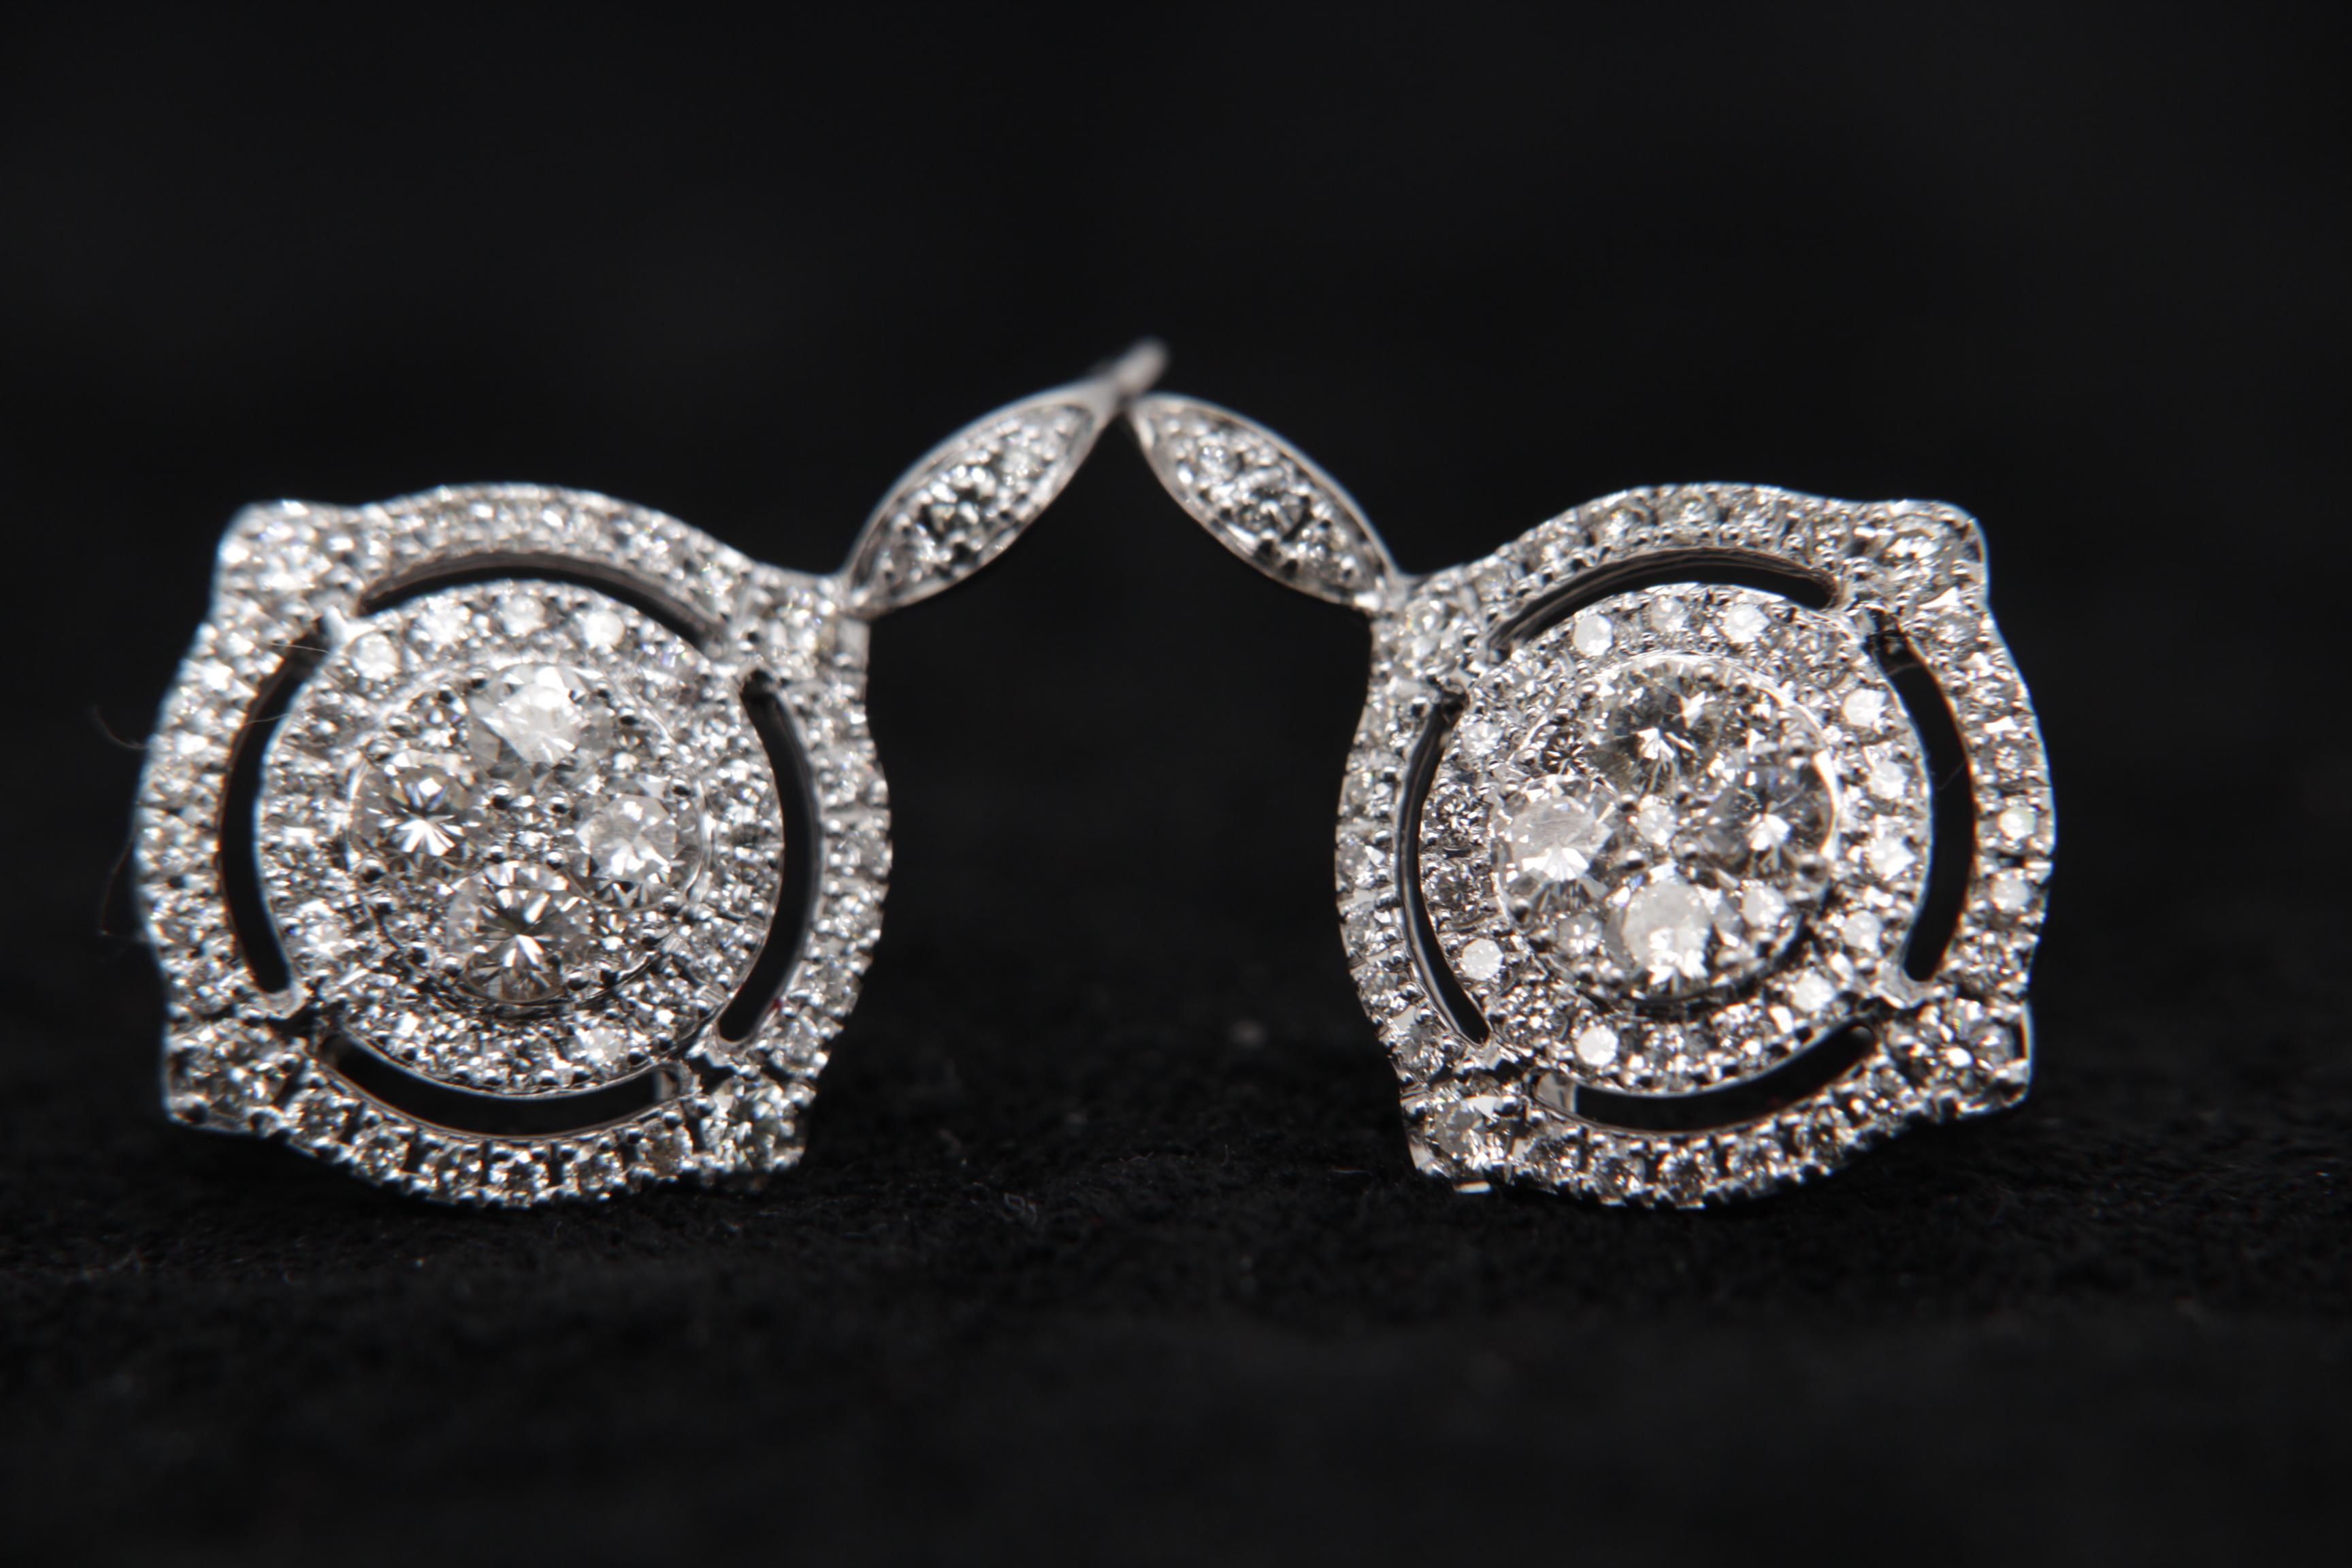 Round Cut 1.43 Carat Diamond Earring in 18 Karat Gold For Sale